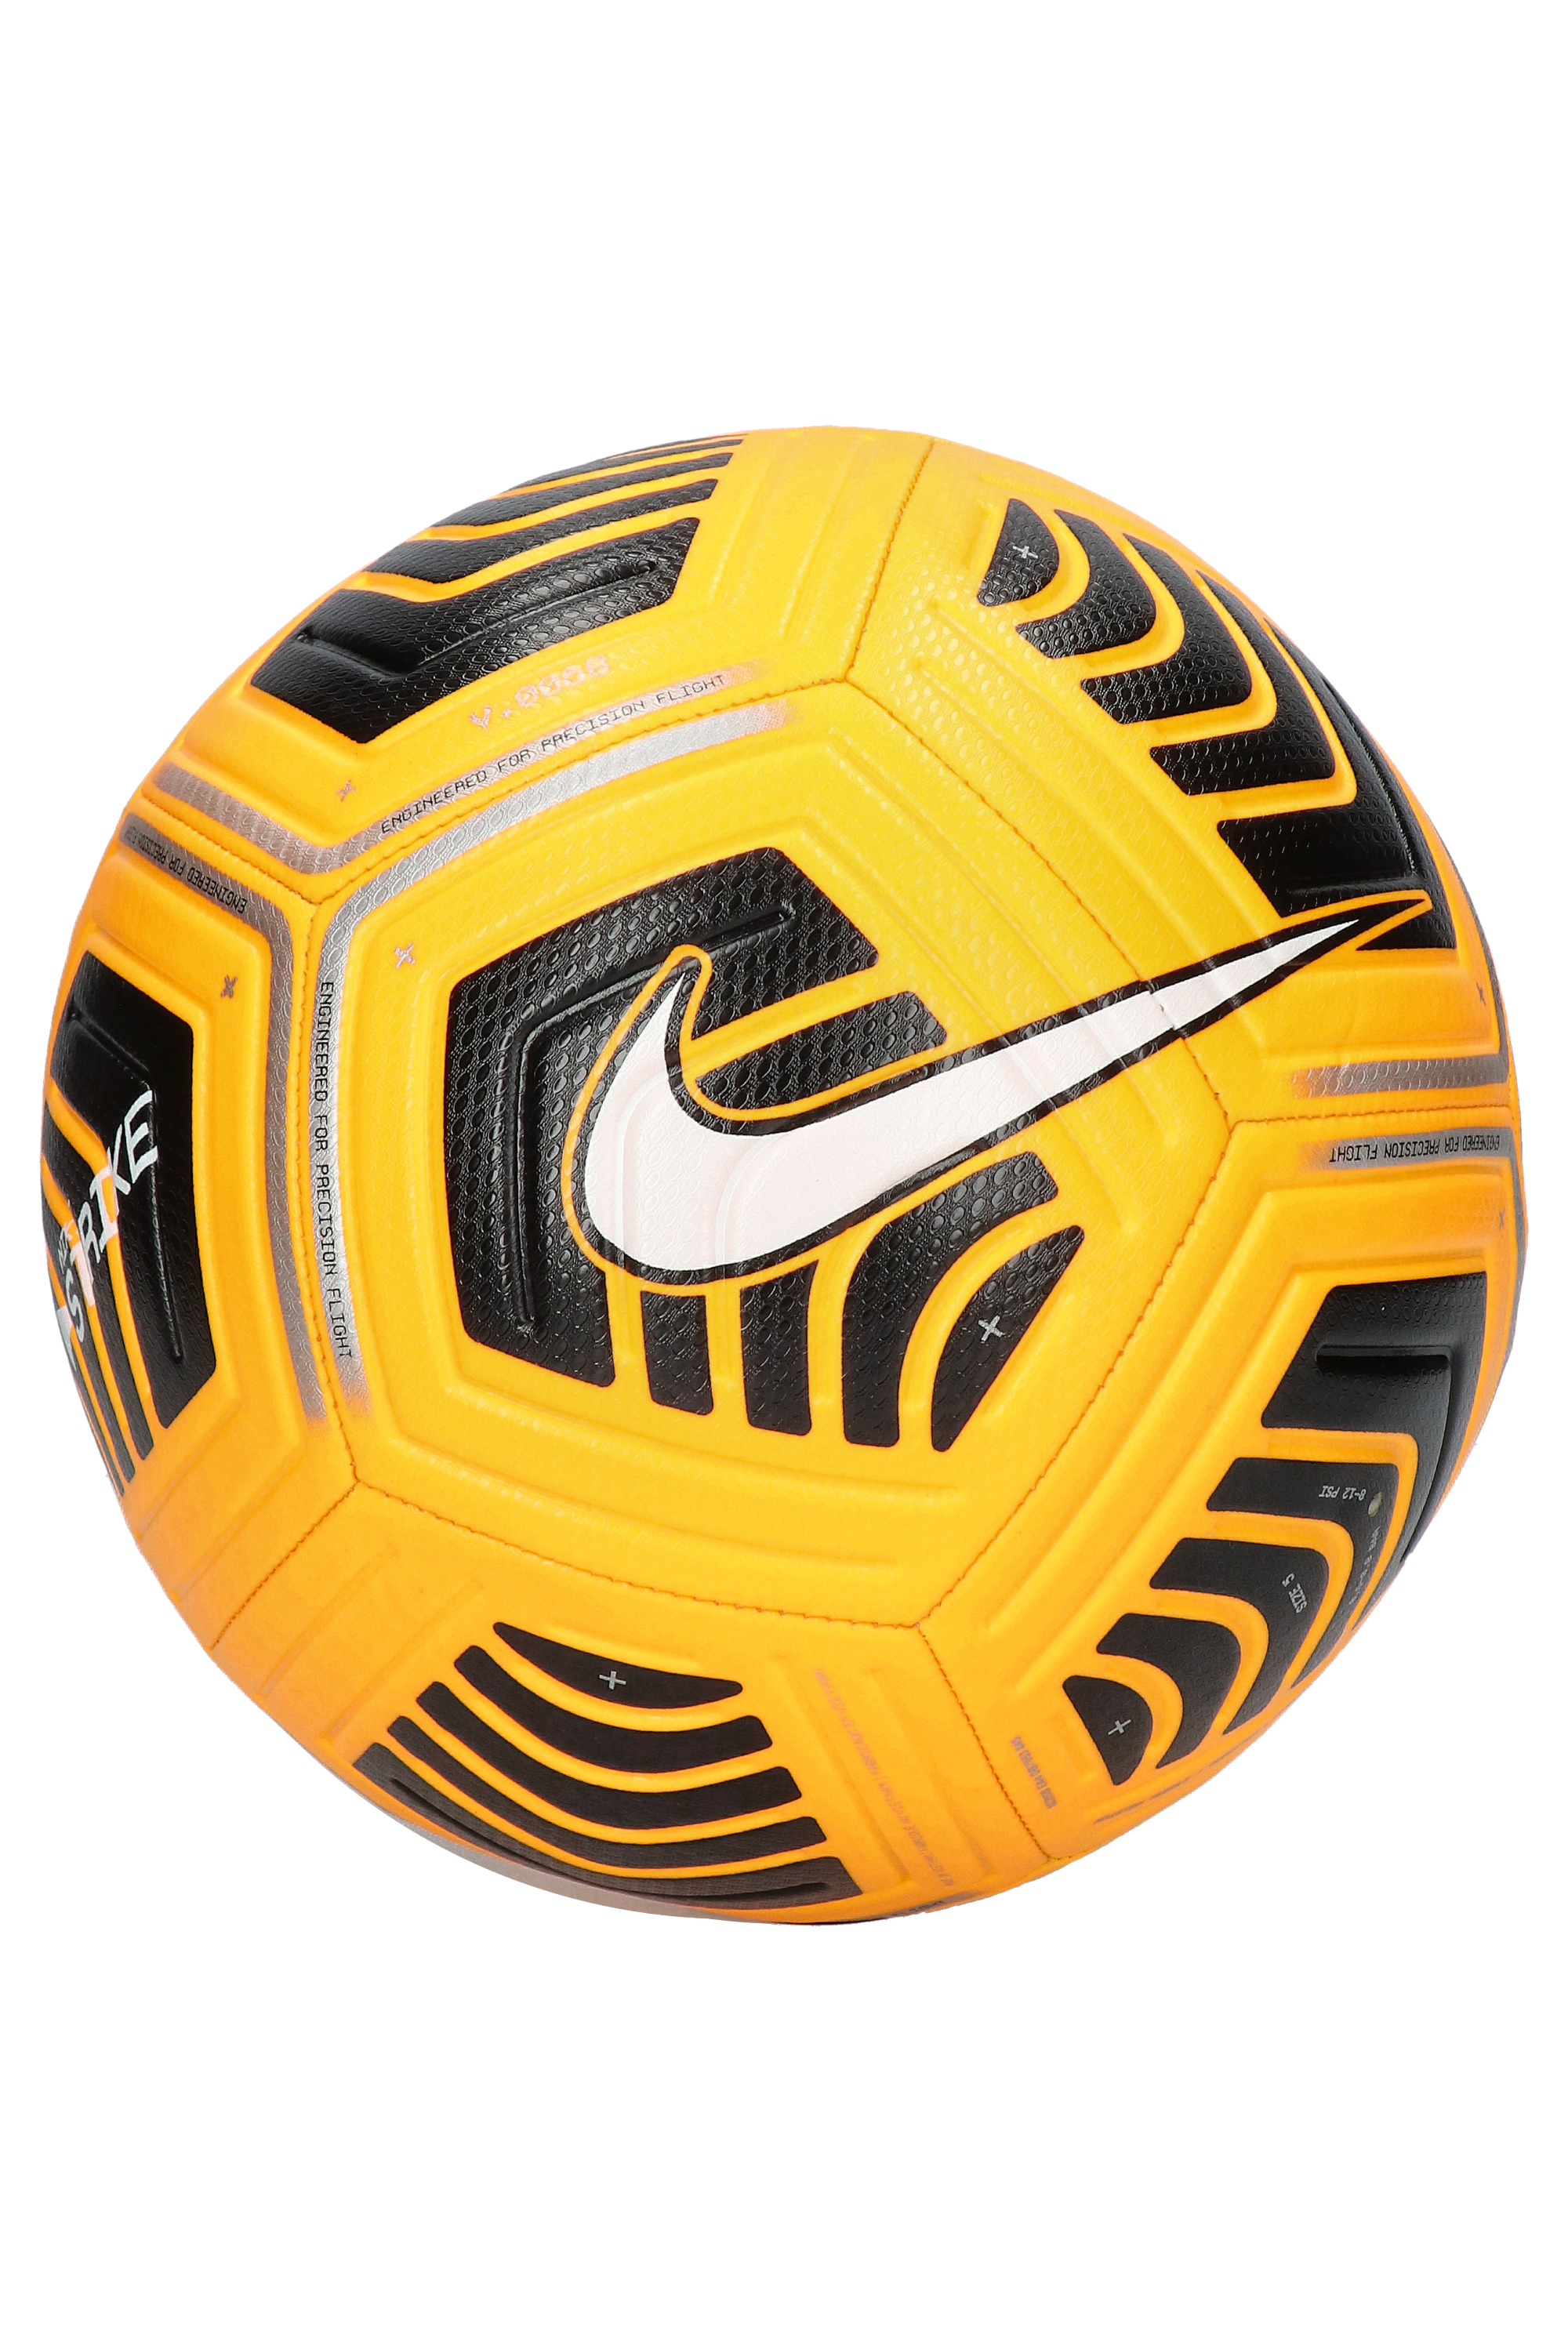 Ball Nike Strike size 3 | R-GOL.com 